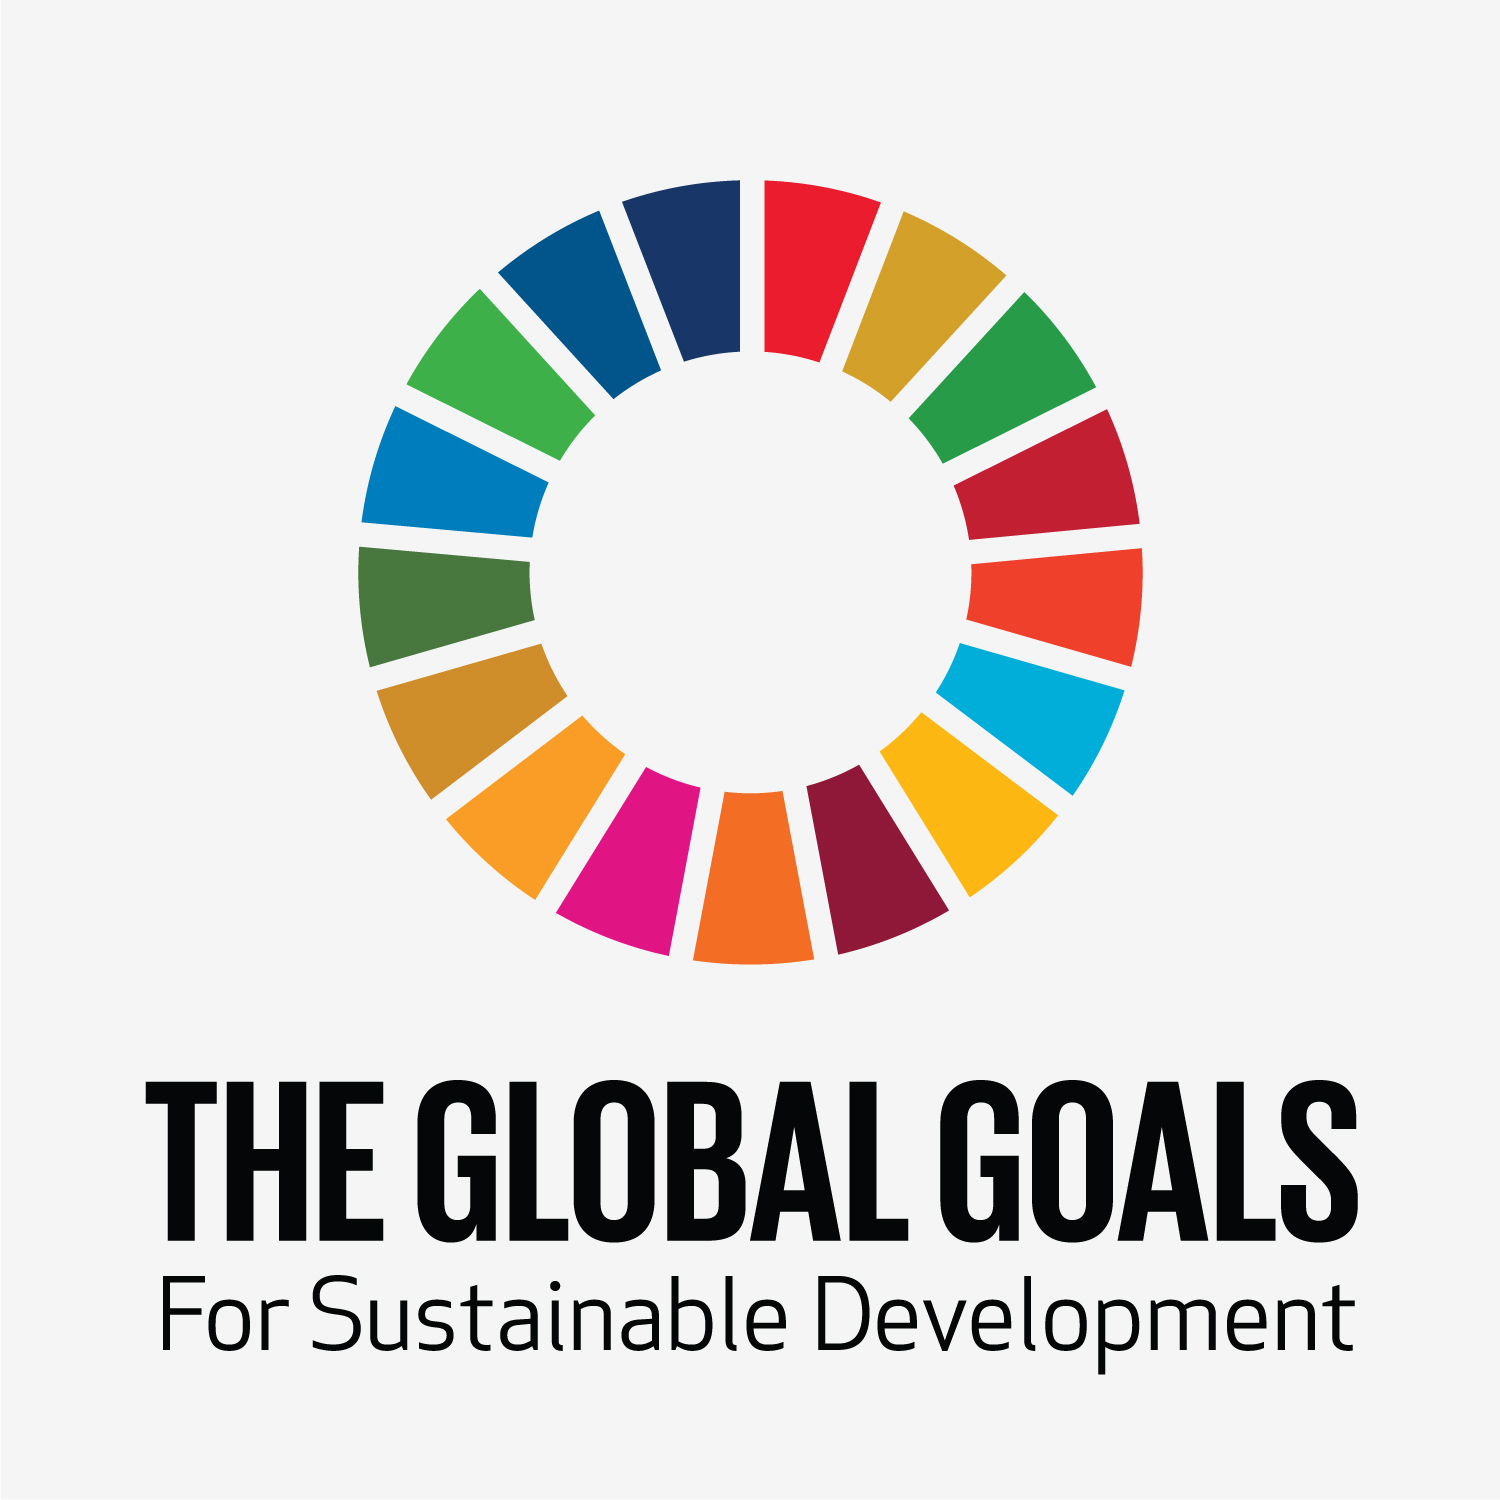 Sustainable Development Goals: SDGs